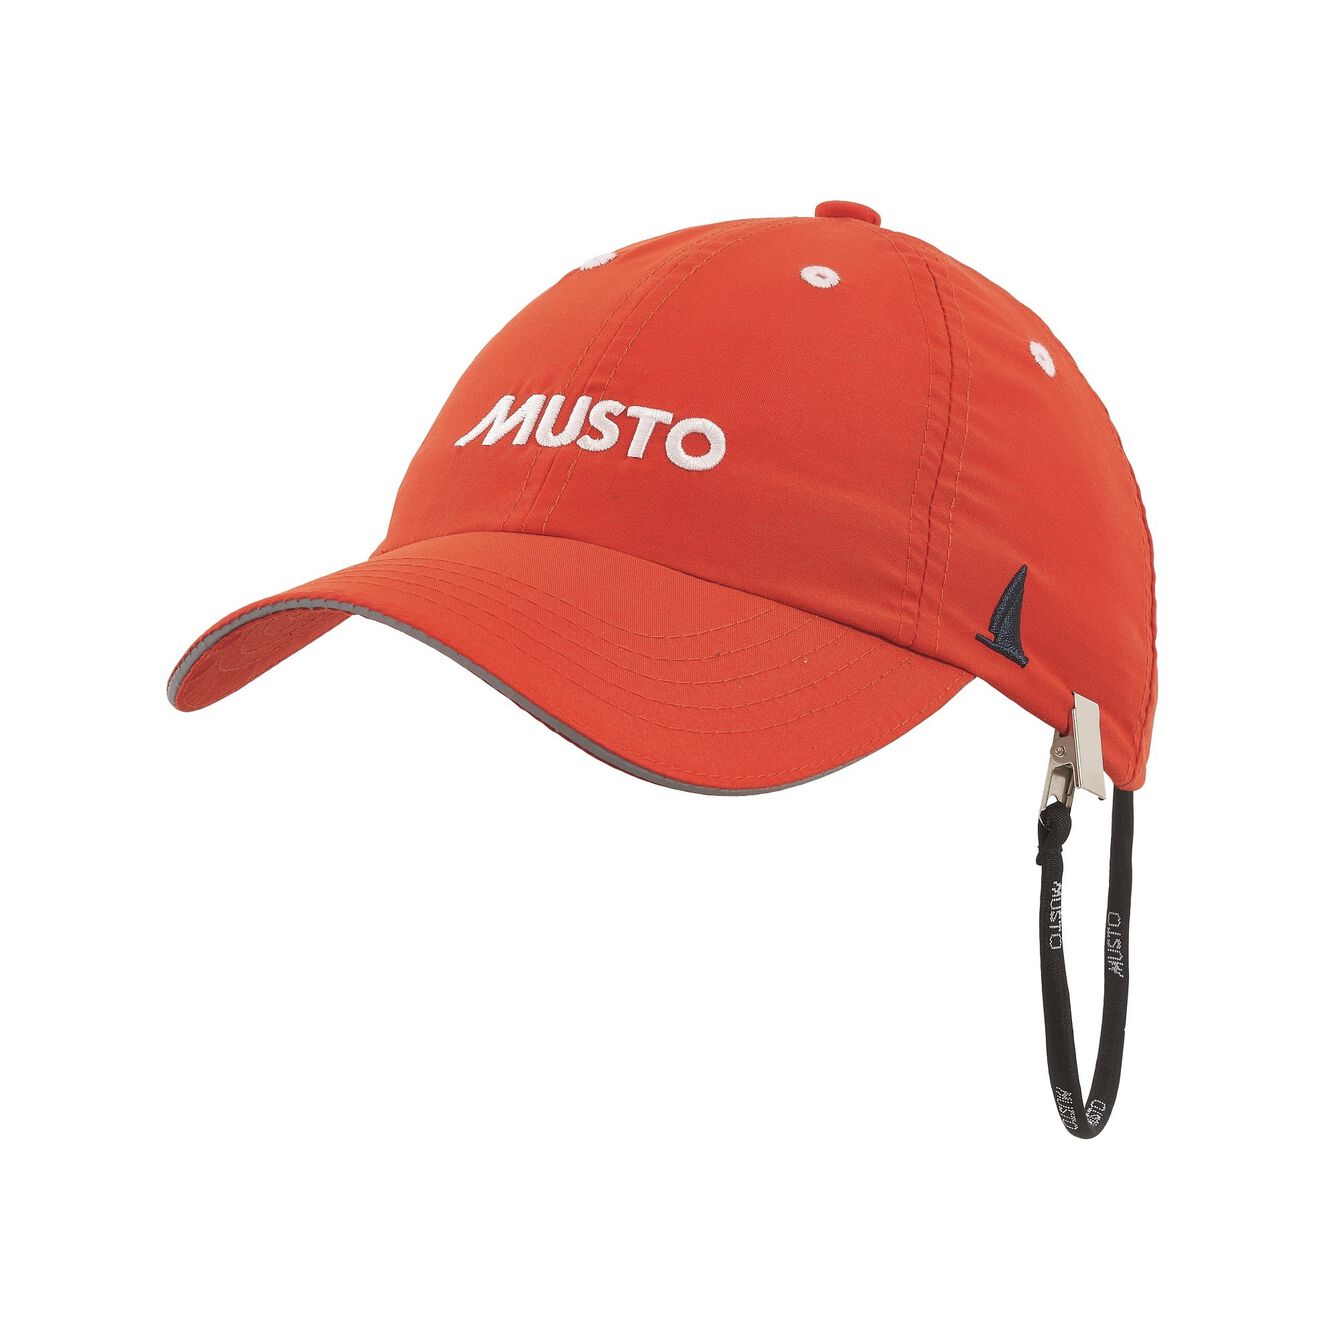 Musto FastDry Crew Caps